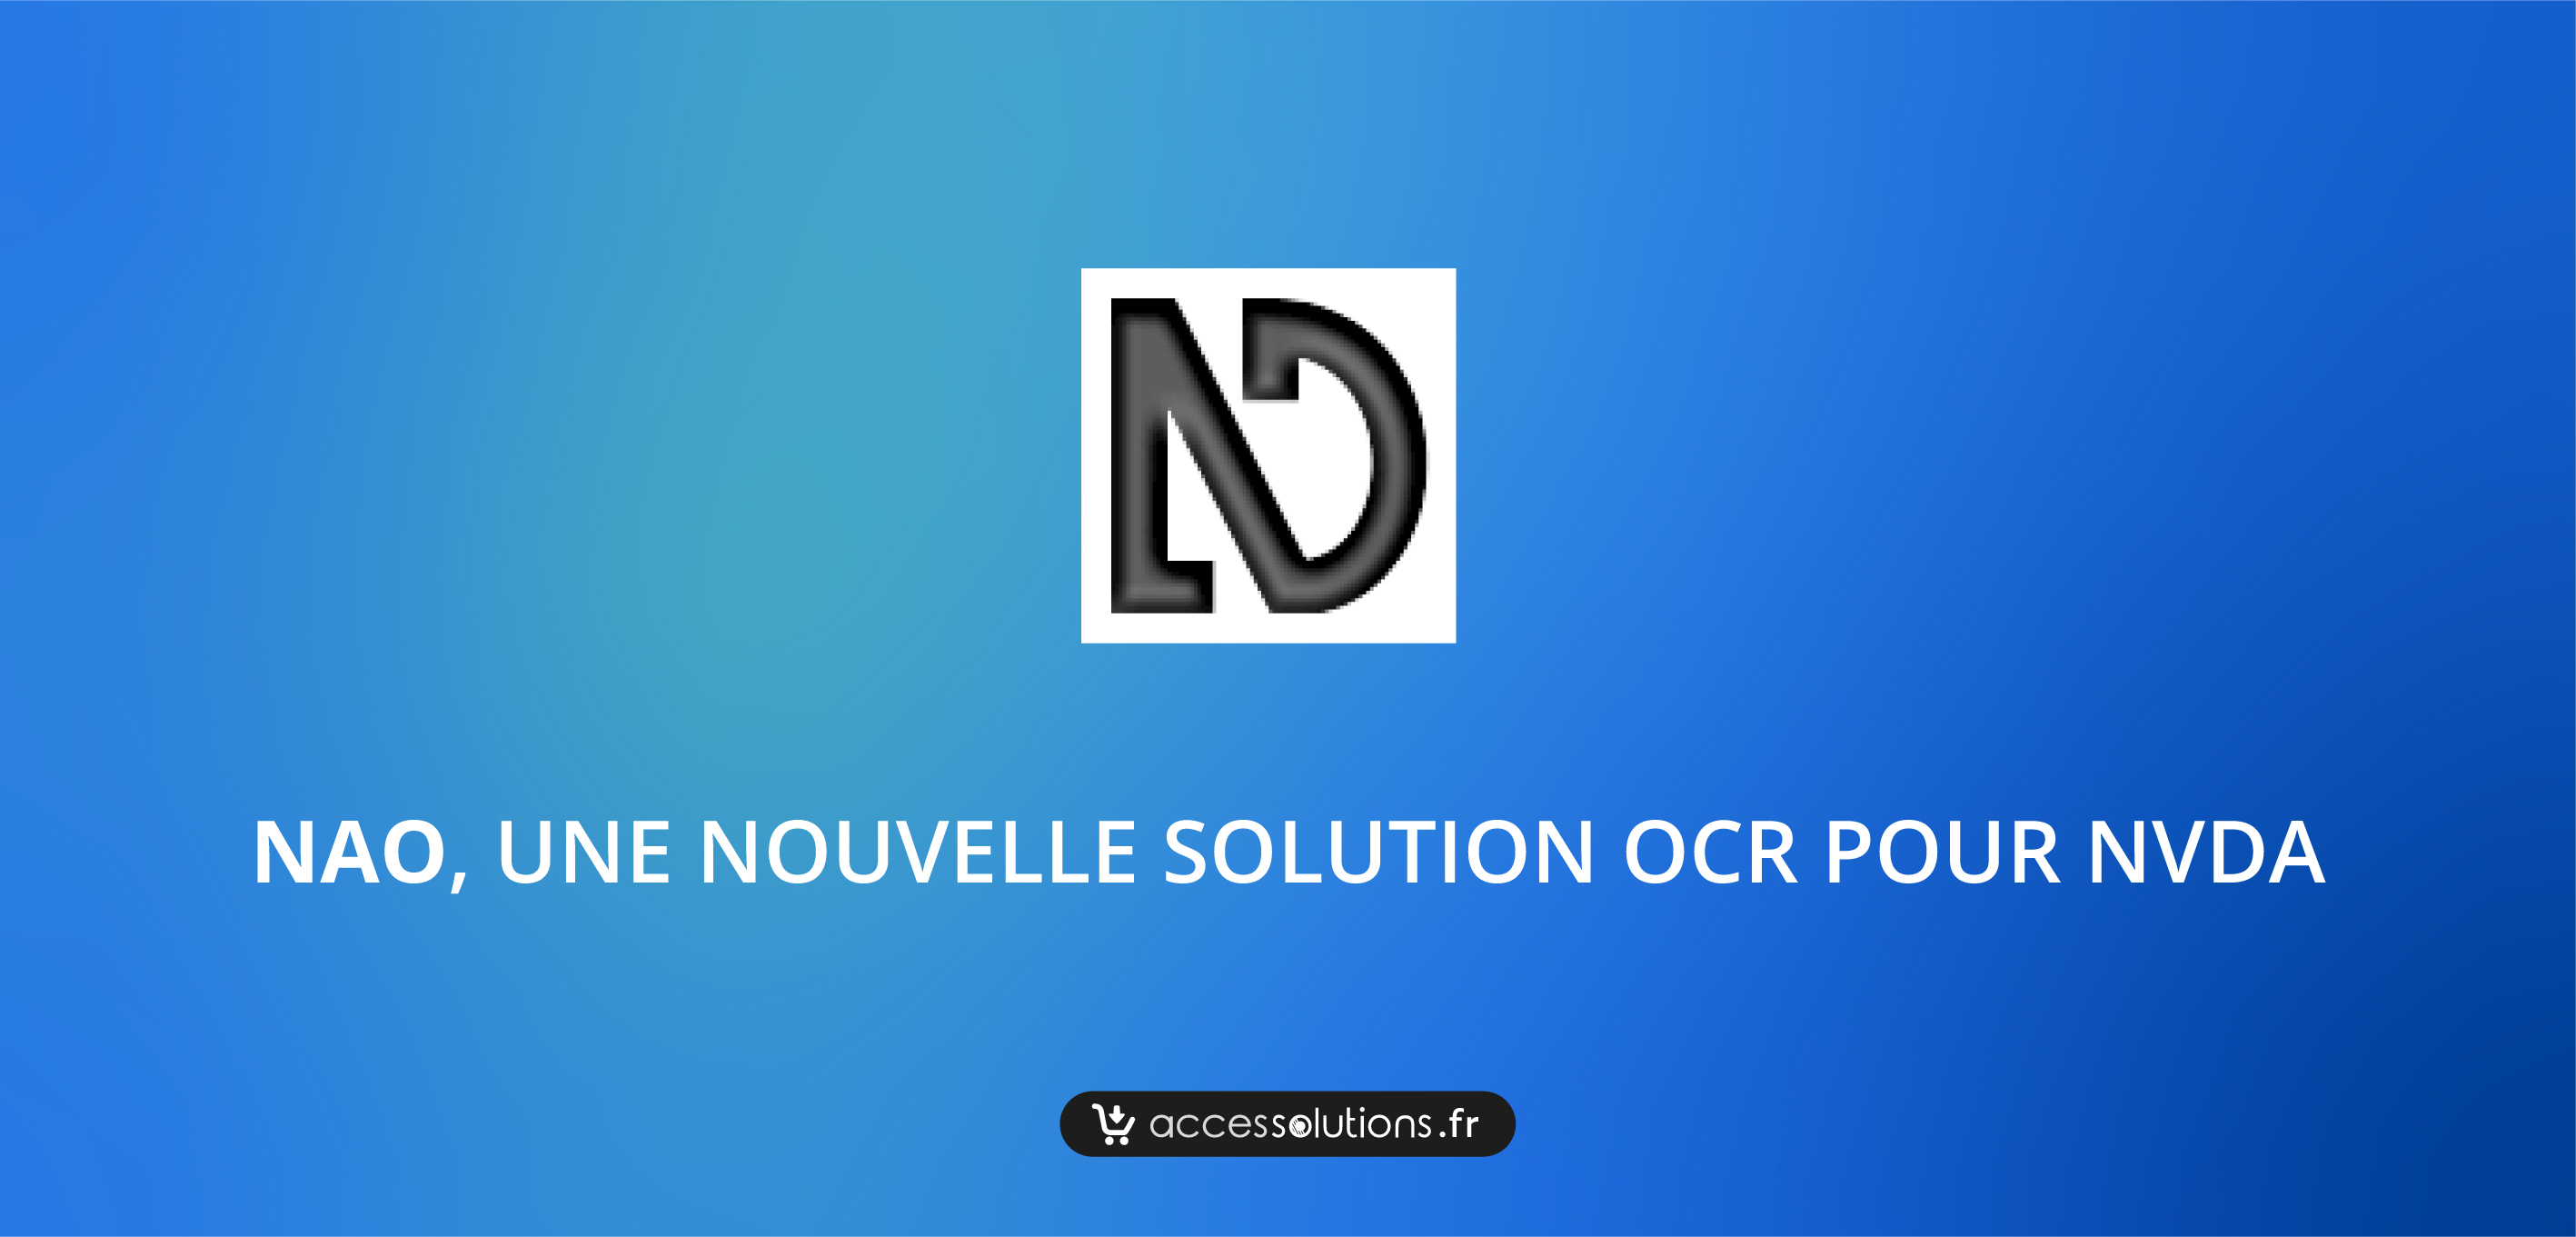 NAO, une nouvelle solution OCR pour NVDA